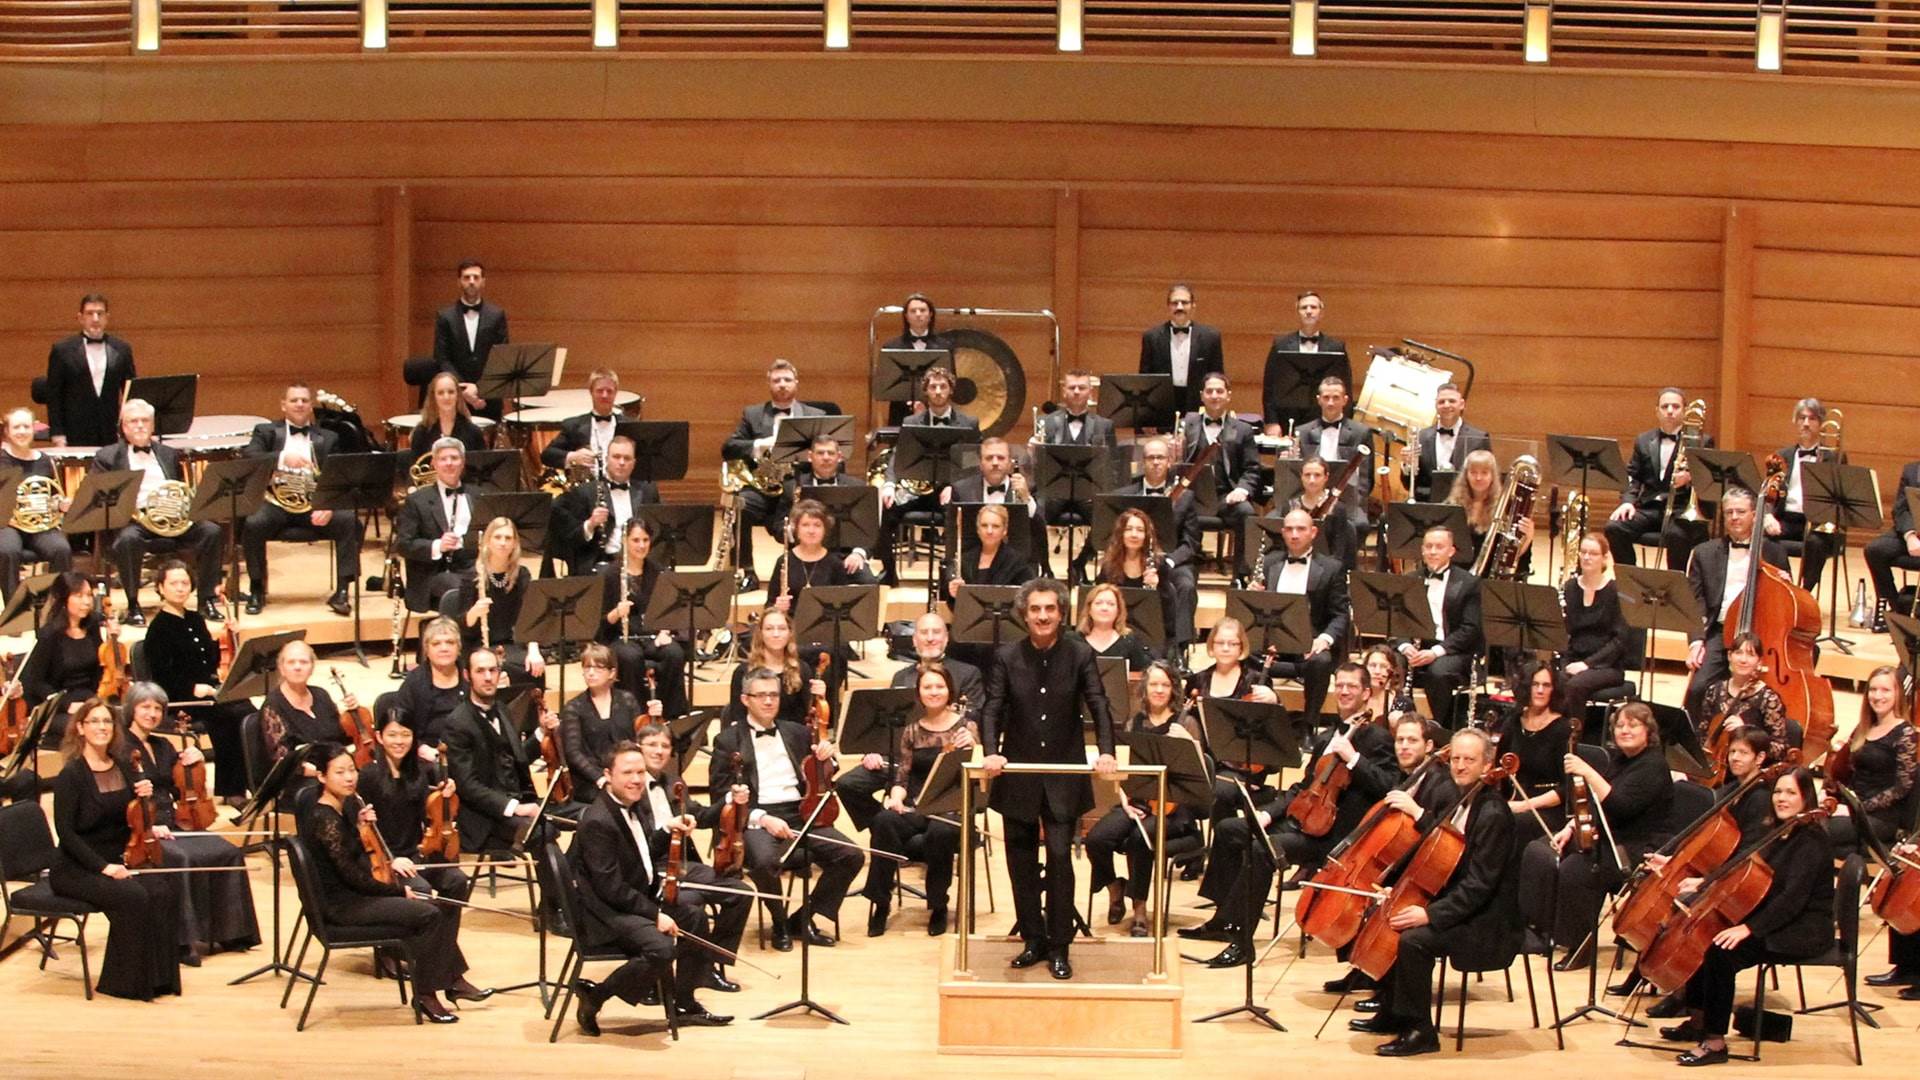 Annapolis Symphony Orchestra